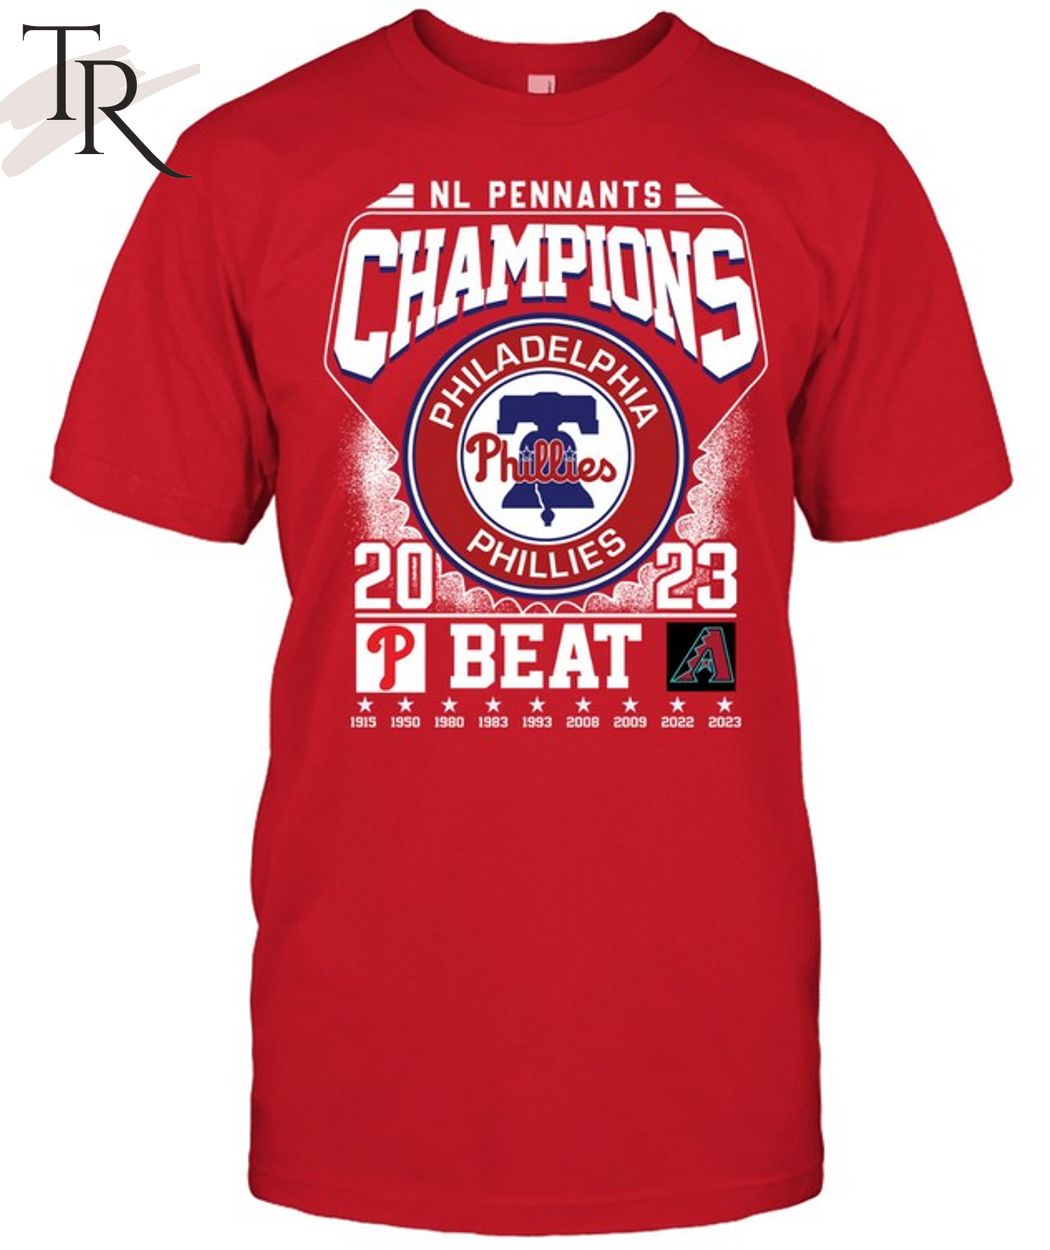 Limited Edition Philadelphia Phillies Beat D Backs T-Shirt